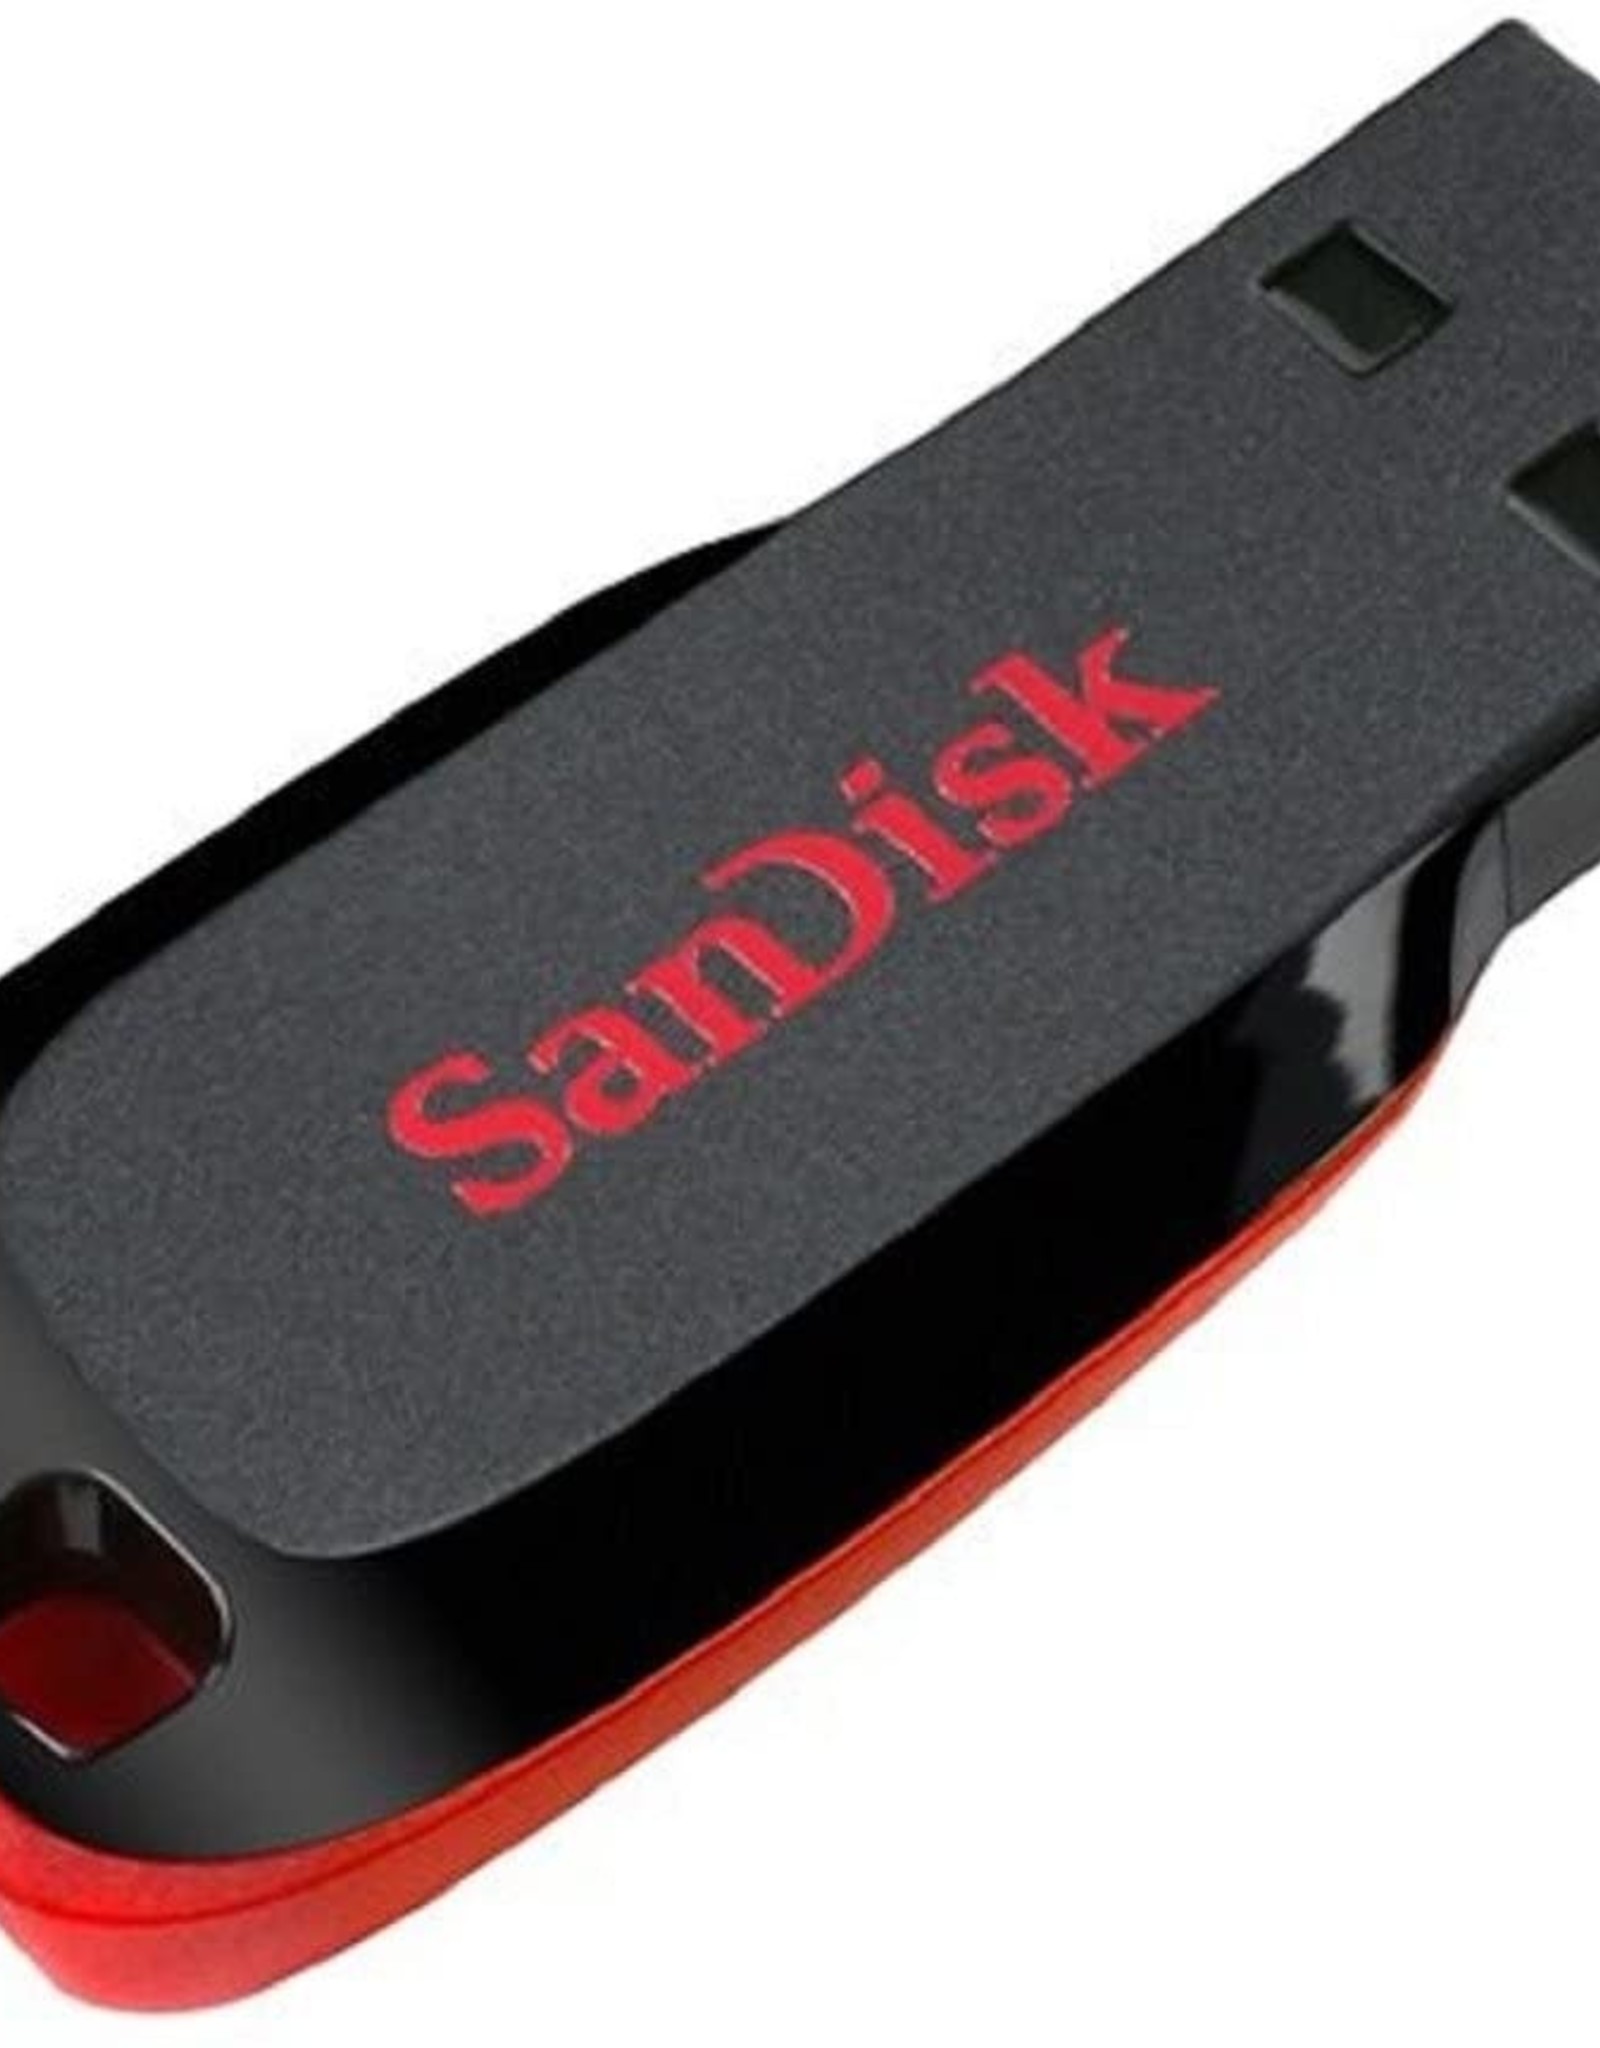 Sandisk SanDisk 32GB Cruzer Blade USB 2.0 Drive